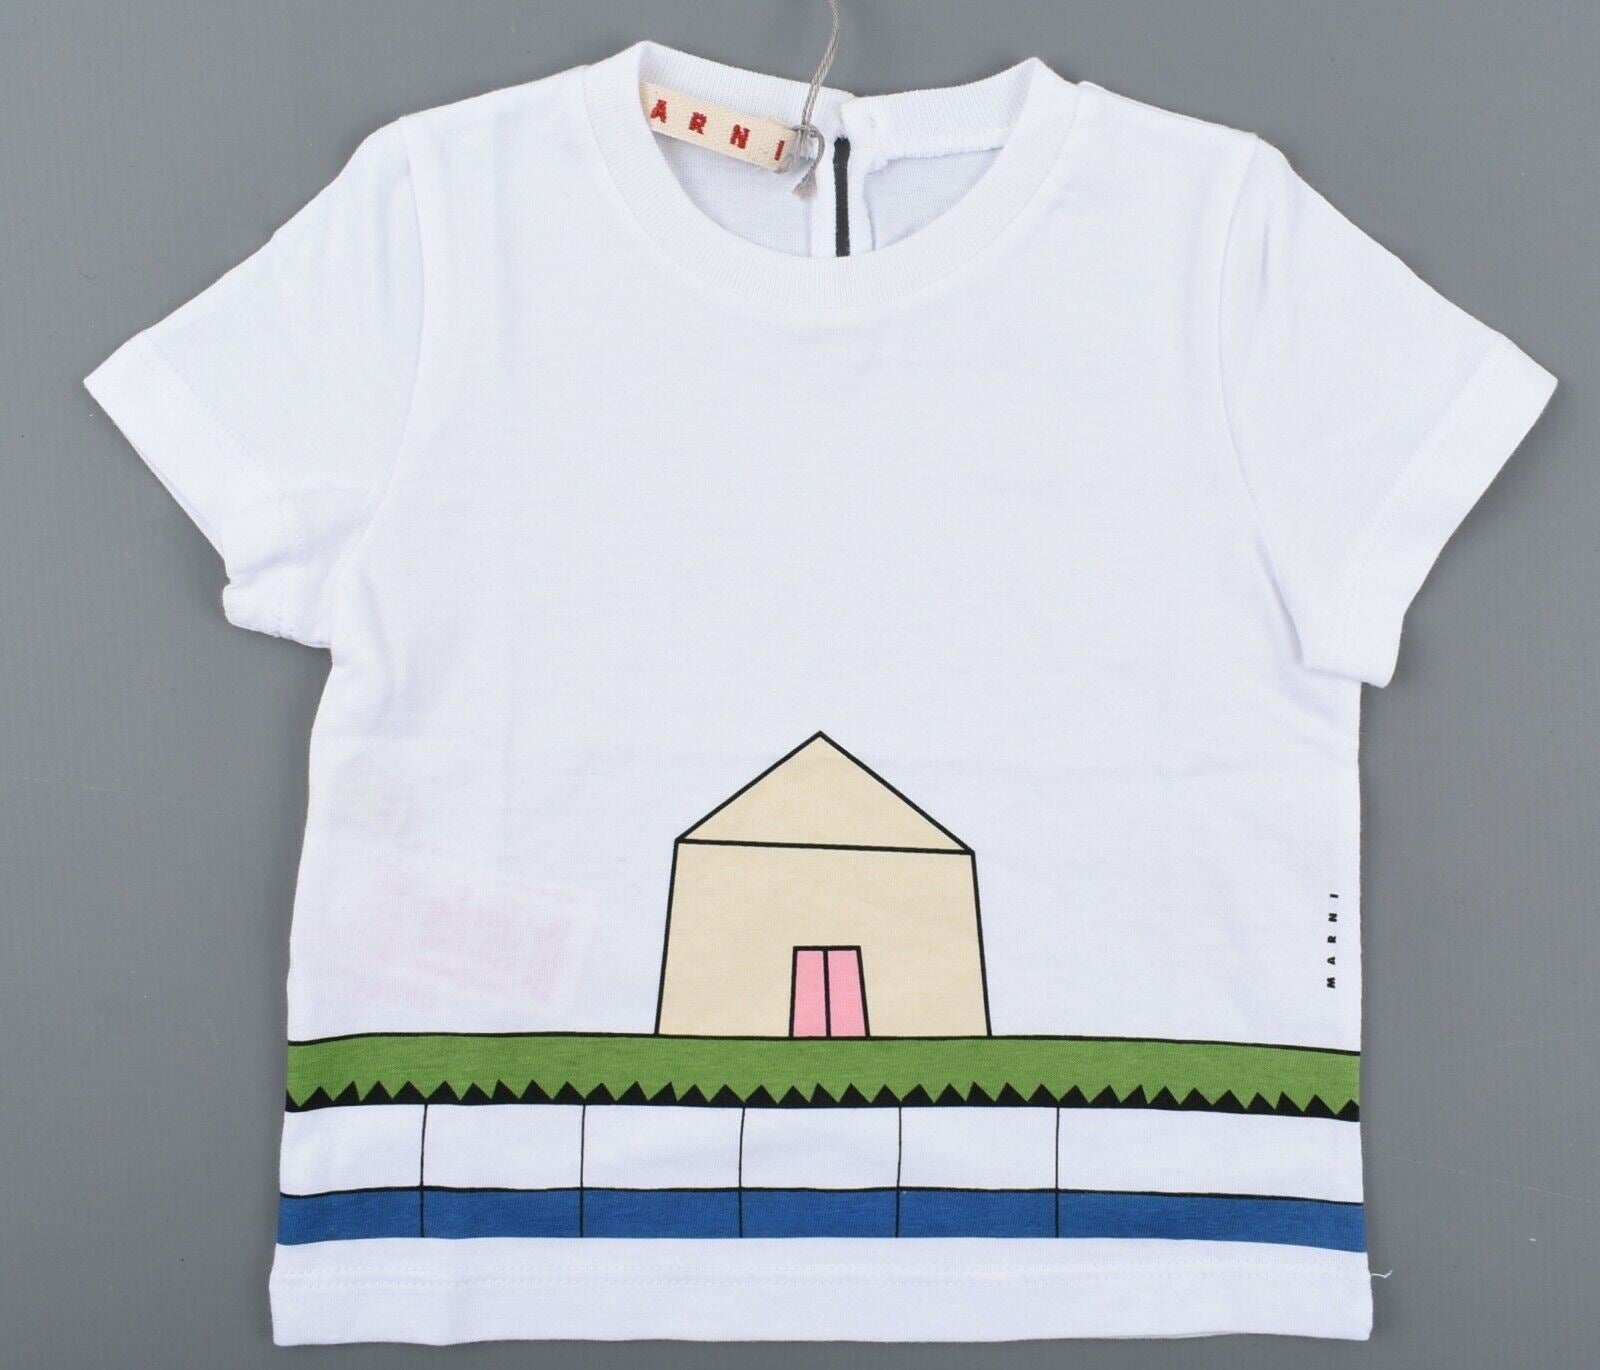 MARNI Baby Boys' Adorable T-shirt, House Print, White, size 9 months